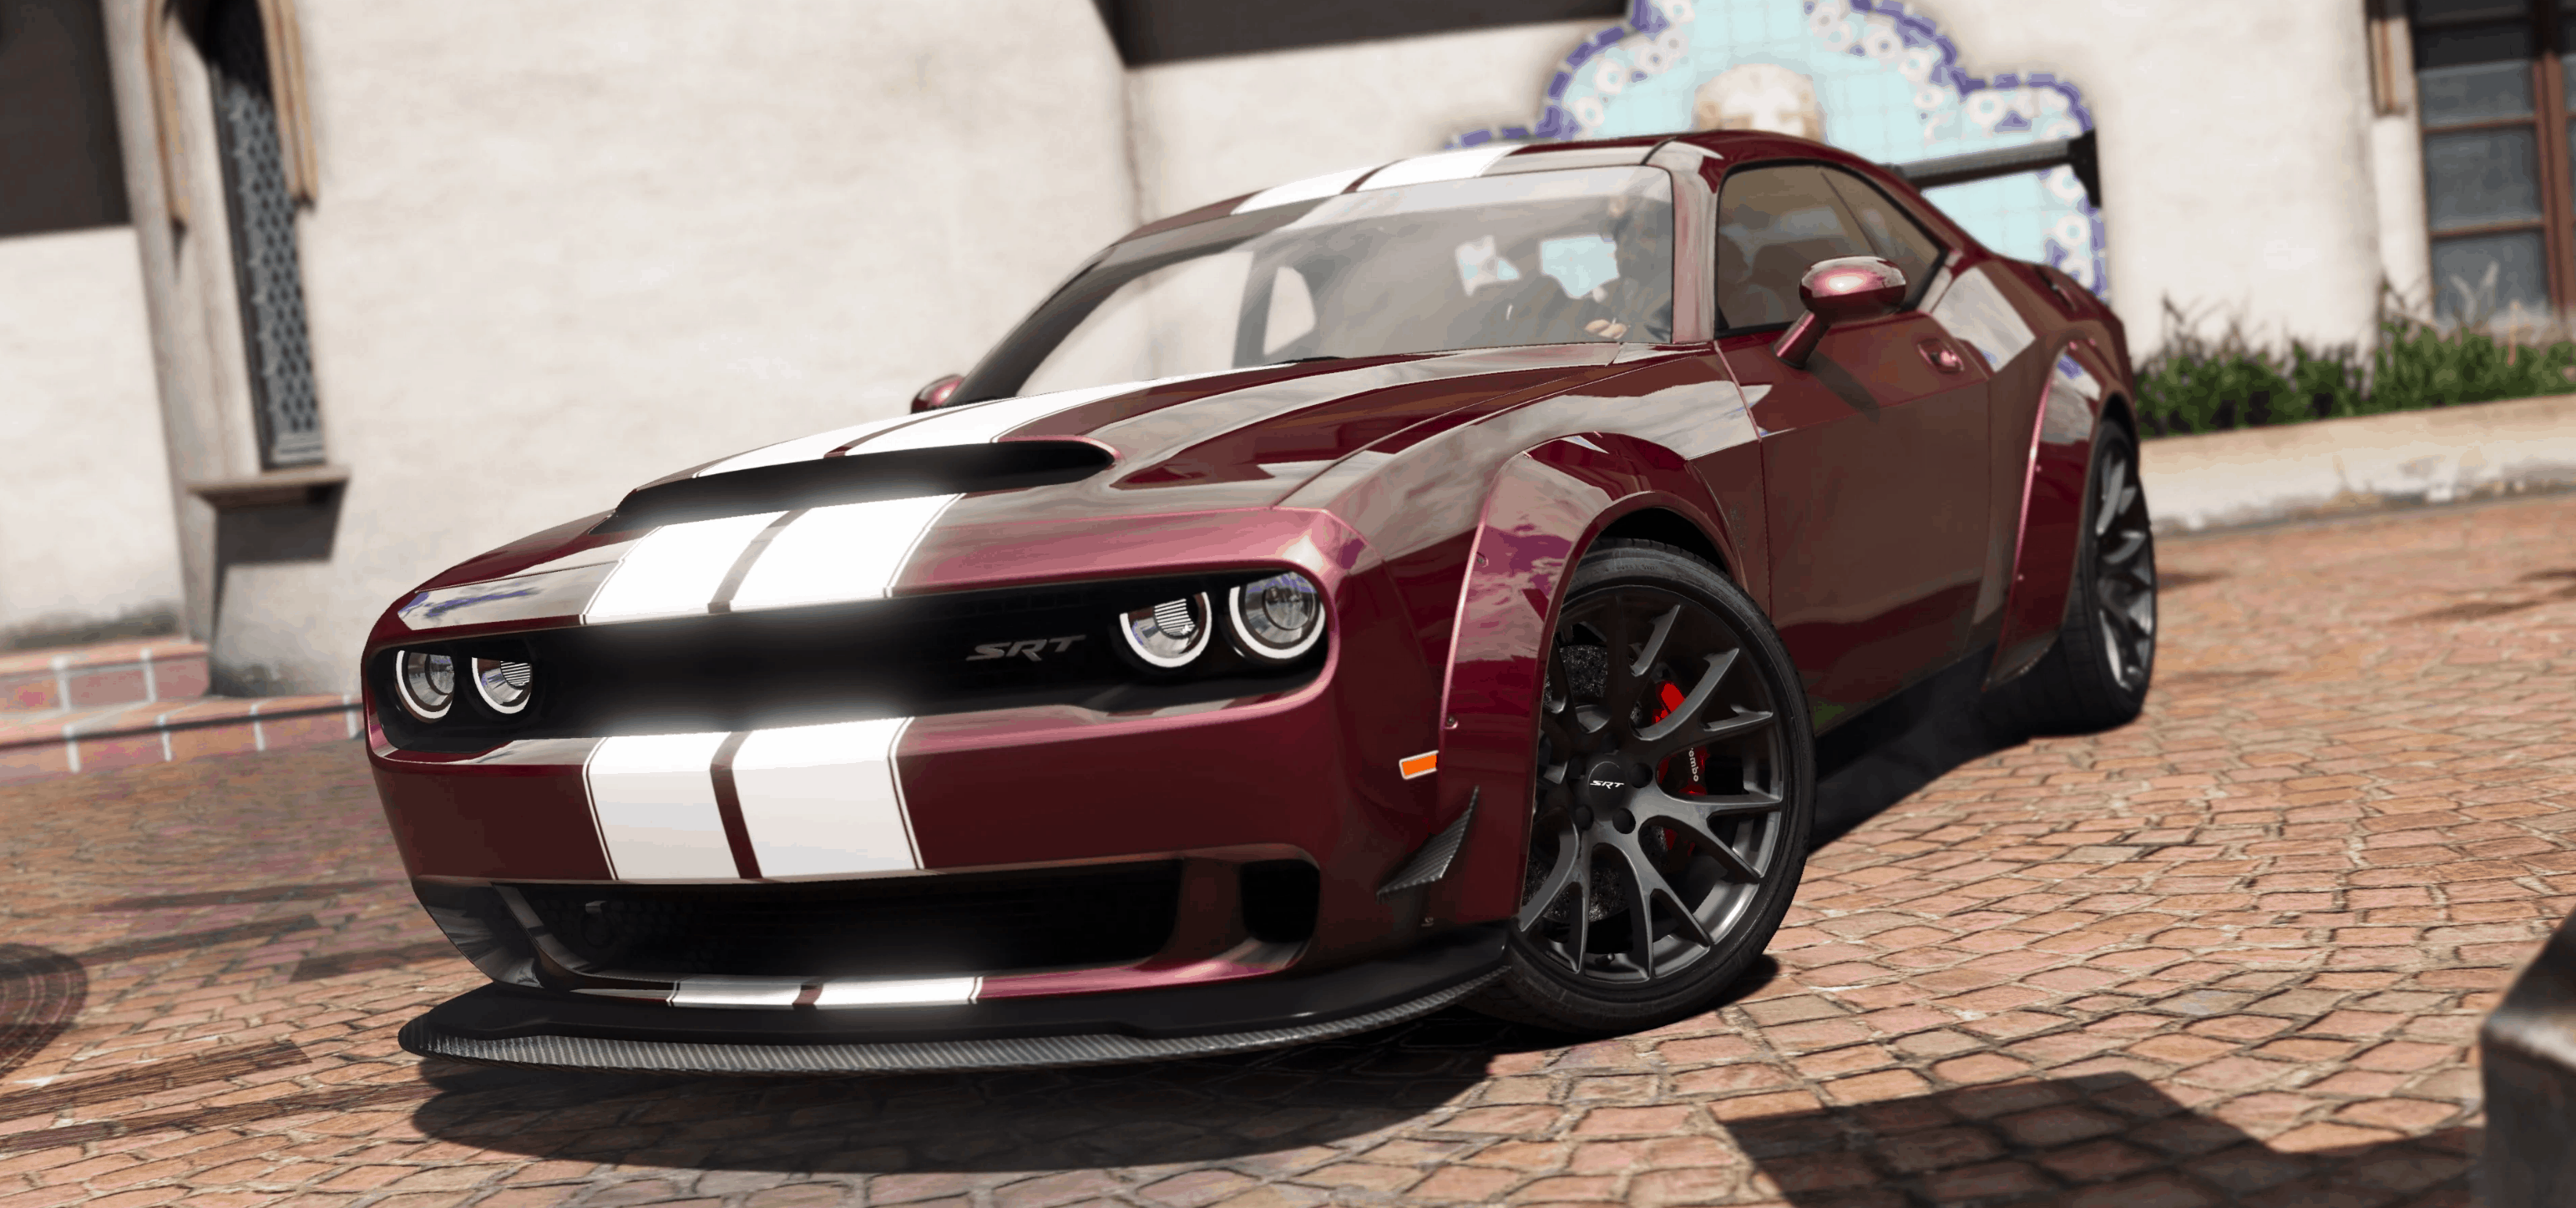 2016 Dodge Challenger 2.1 - GTA 5 Mod | Grand Theft Auto 5 Mod